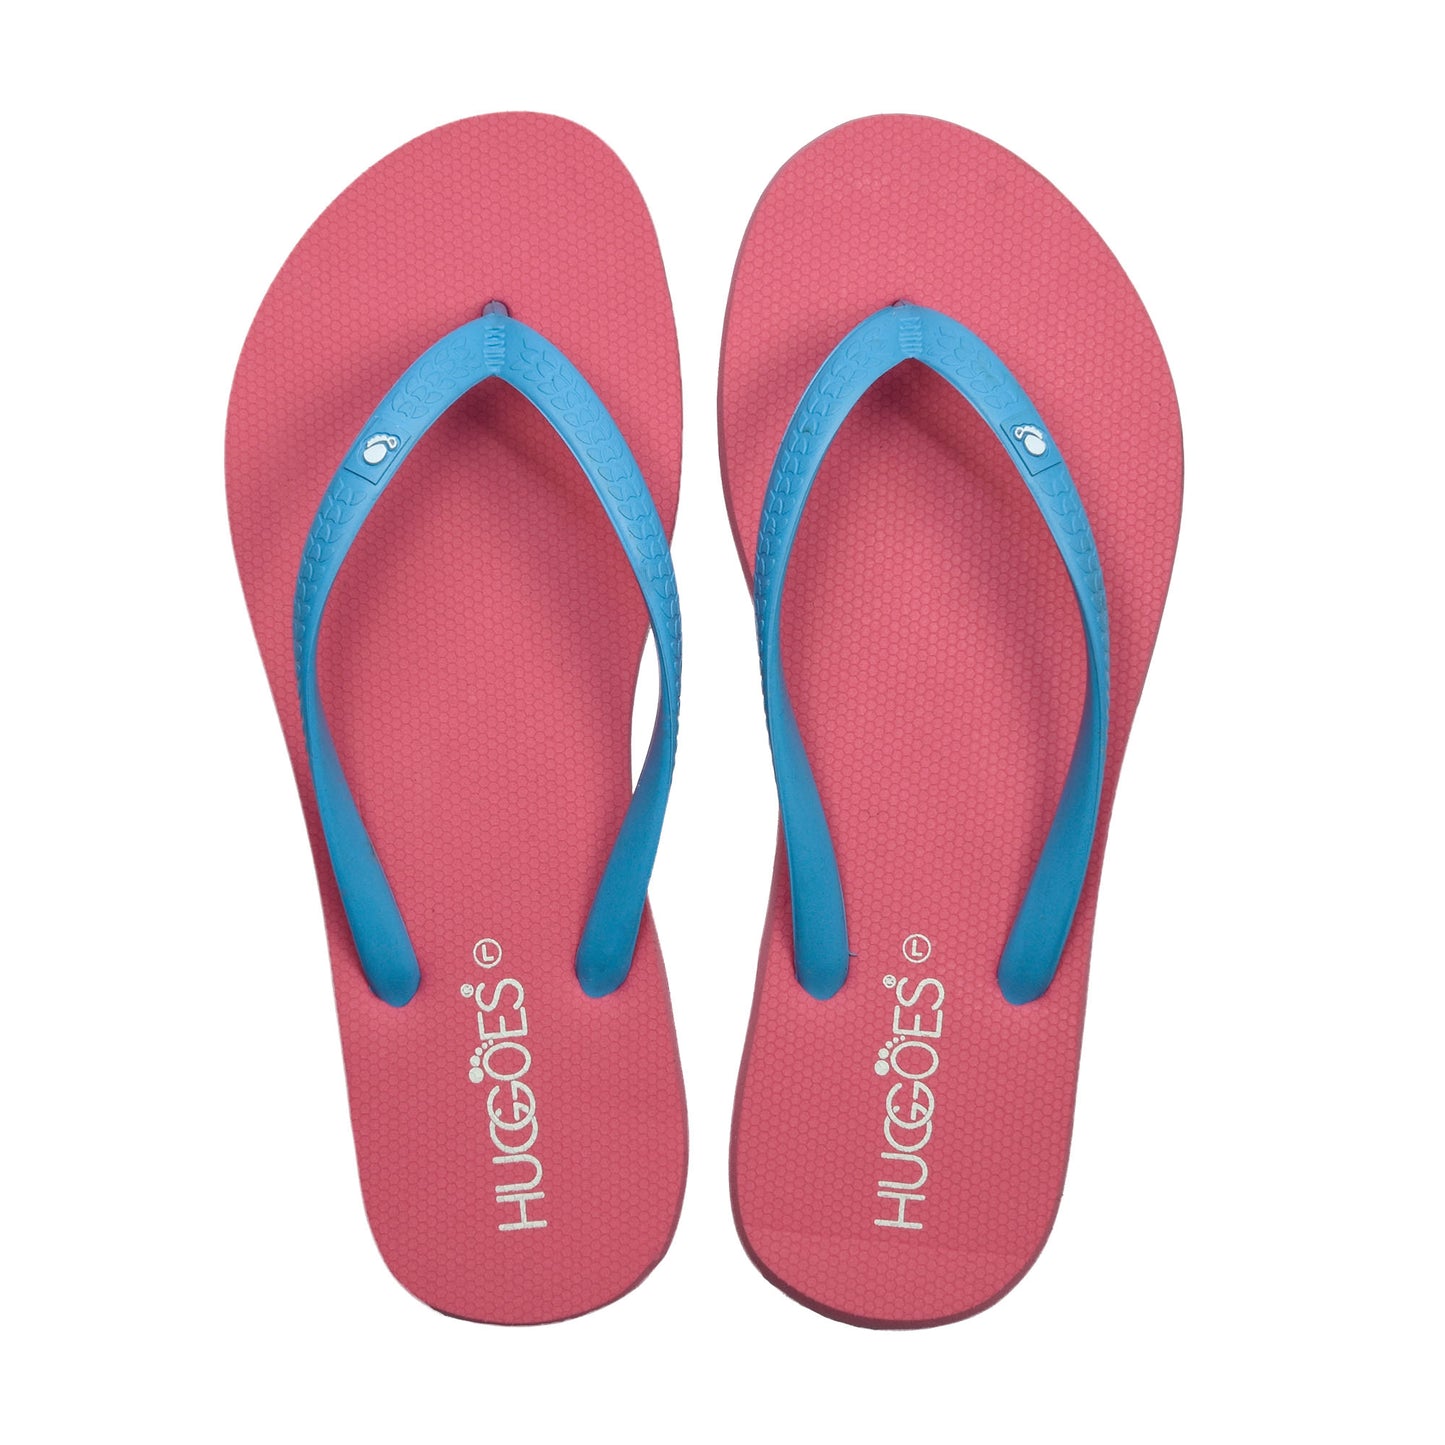 Buy Aerothotic Pakistan Smoky White/Pink Women Flip flops Slippers